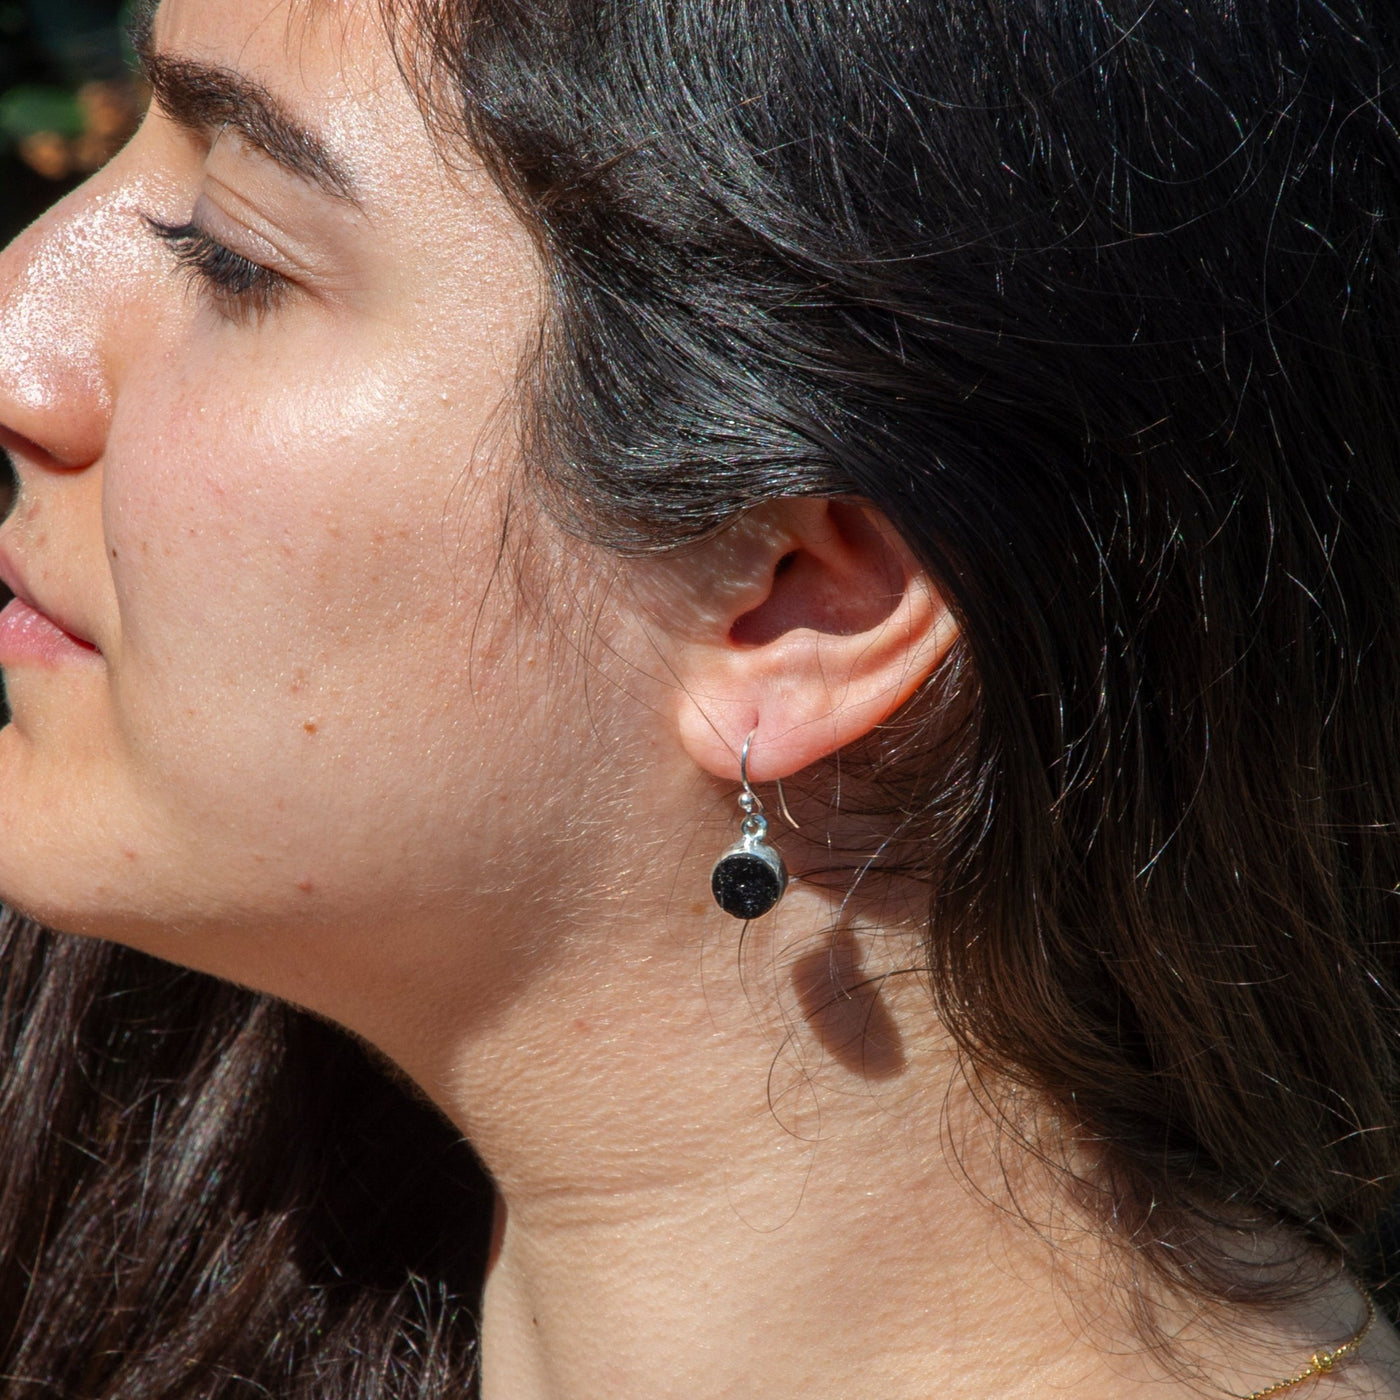 woman wearing genuine Black Tourmaline drop earrings with sterling silver fish hook backs by Energy Muse